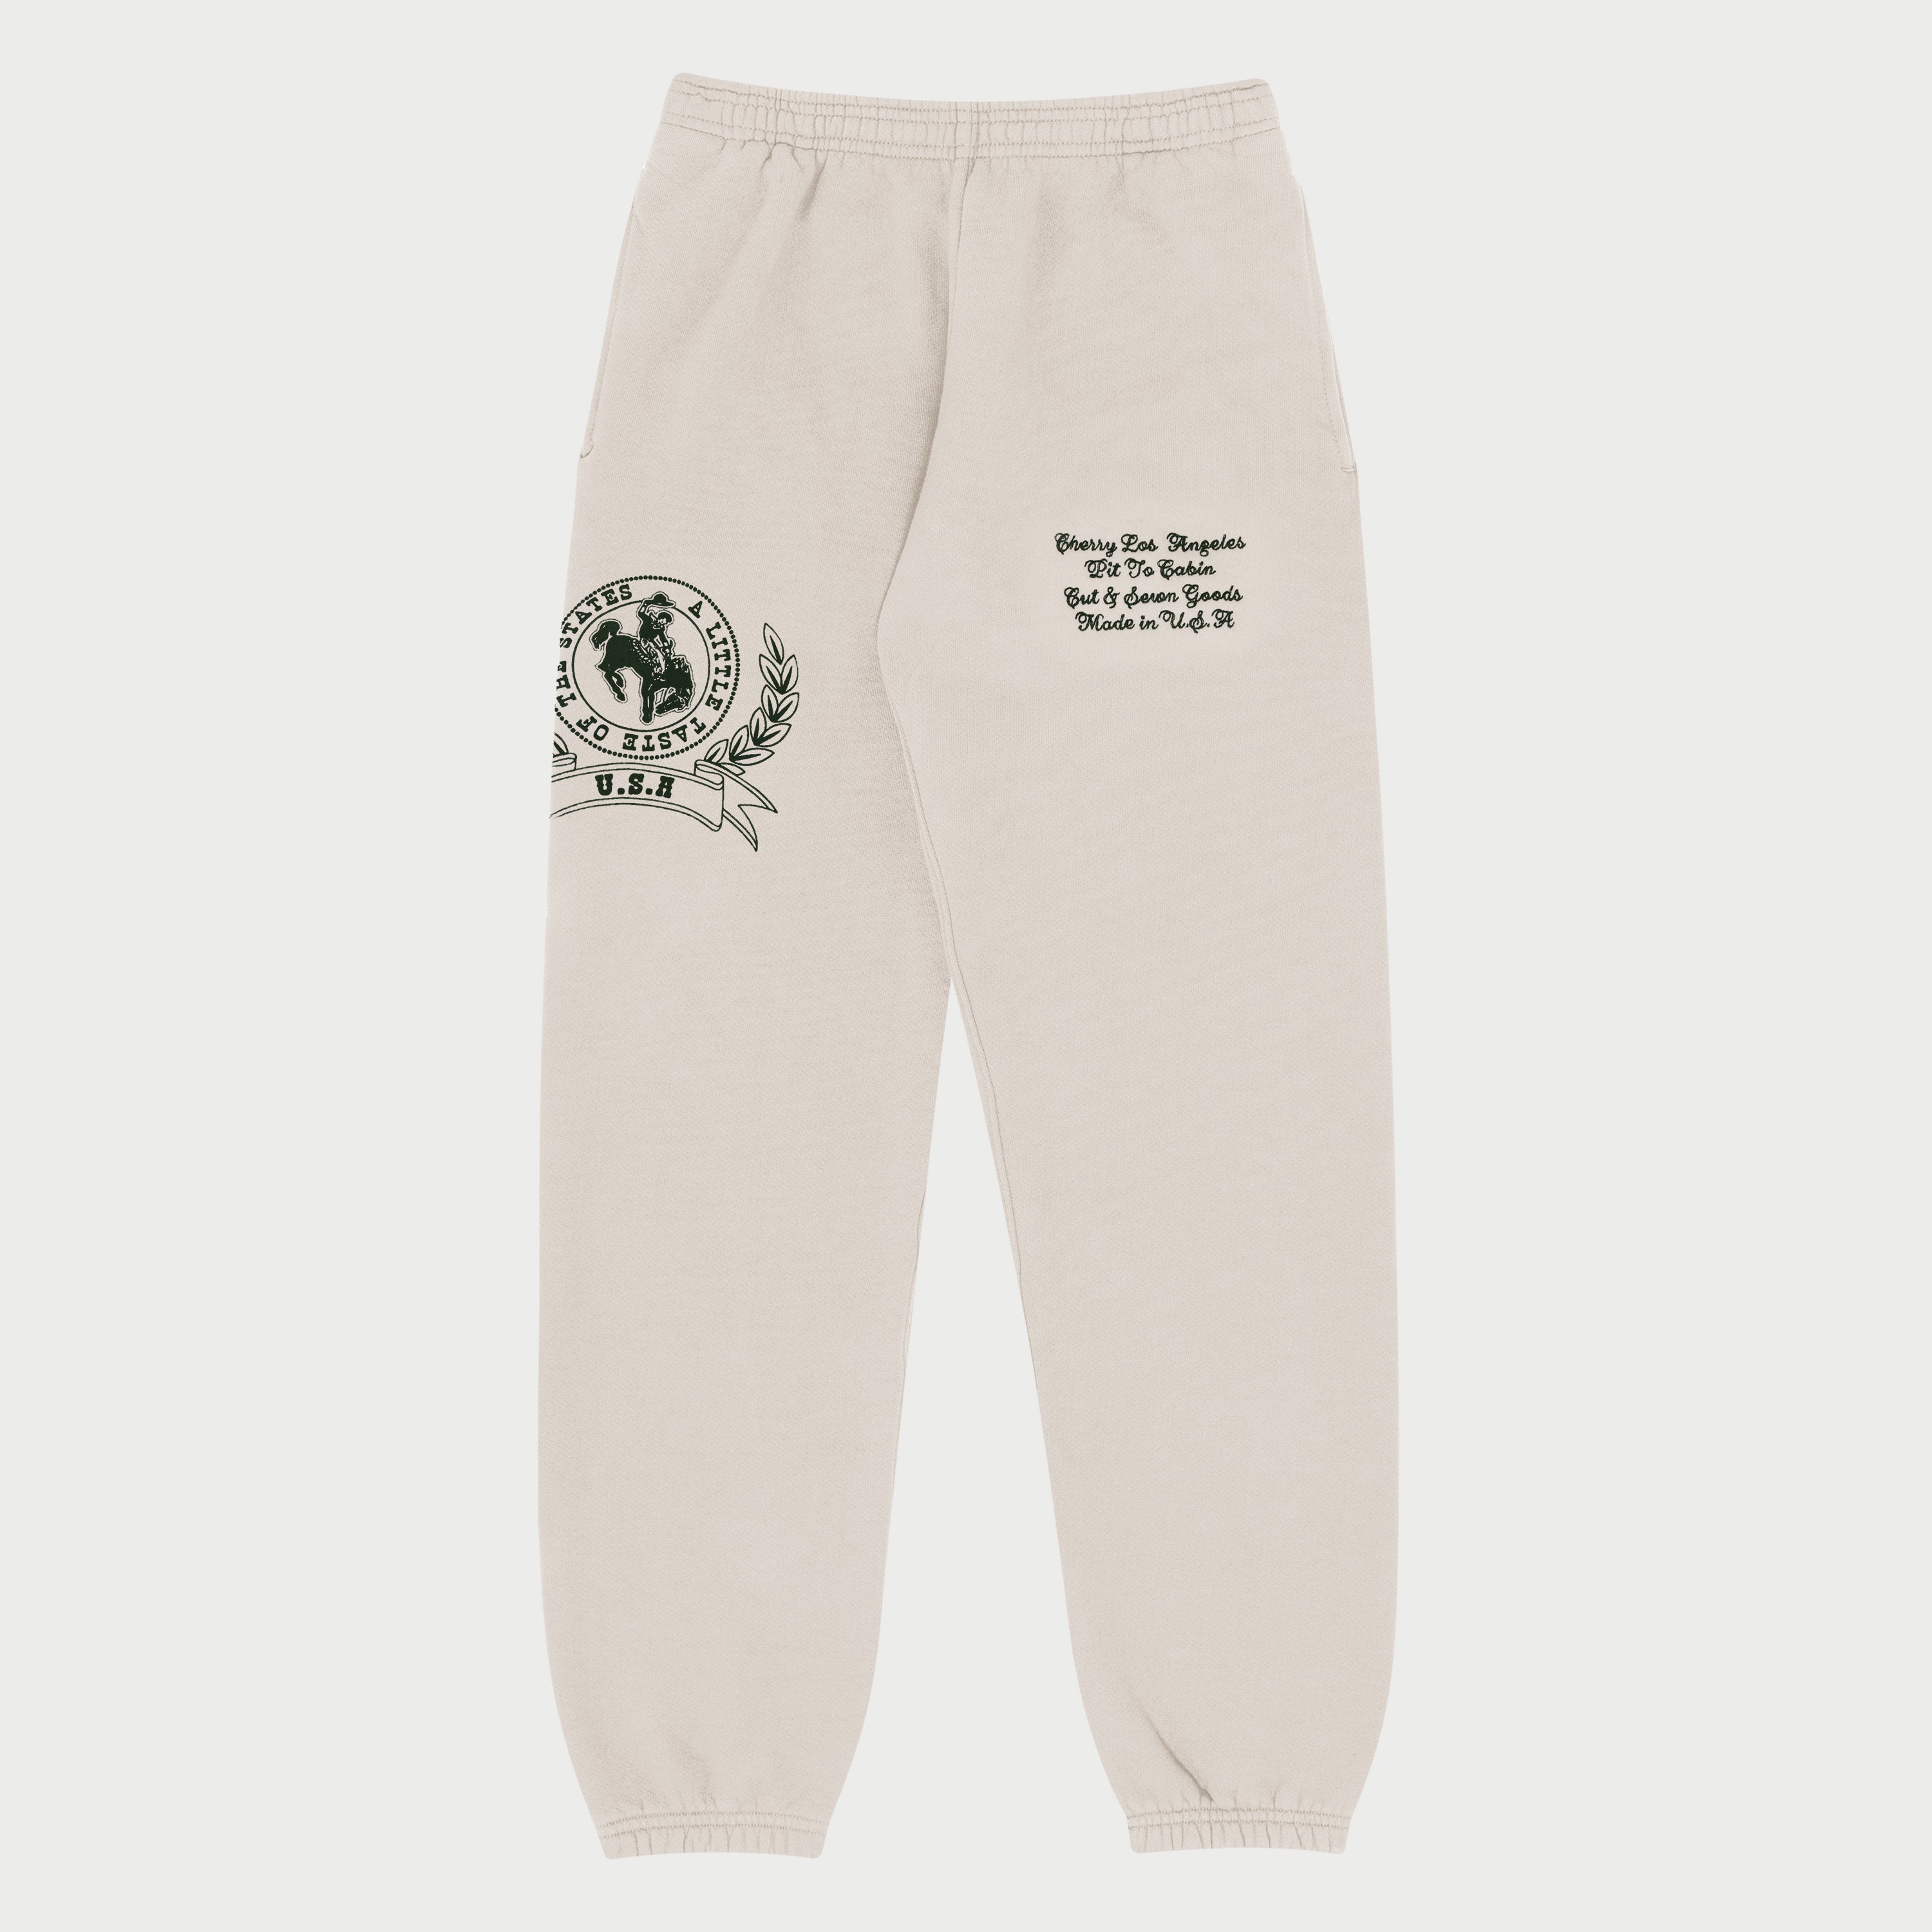 Rodeo Athletic Sweatpants (Cream)